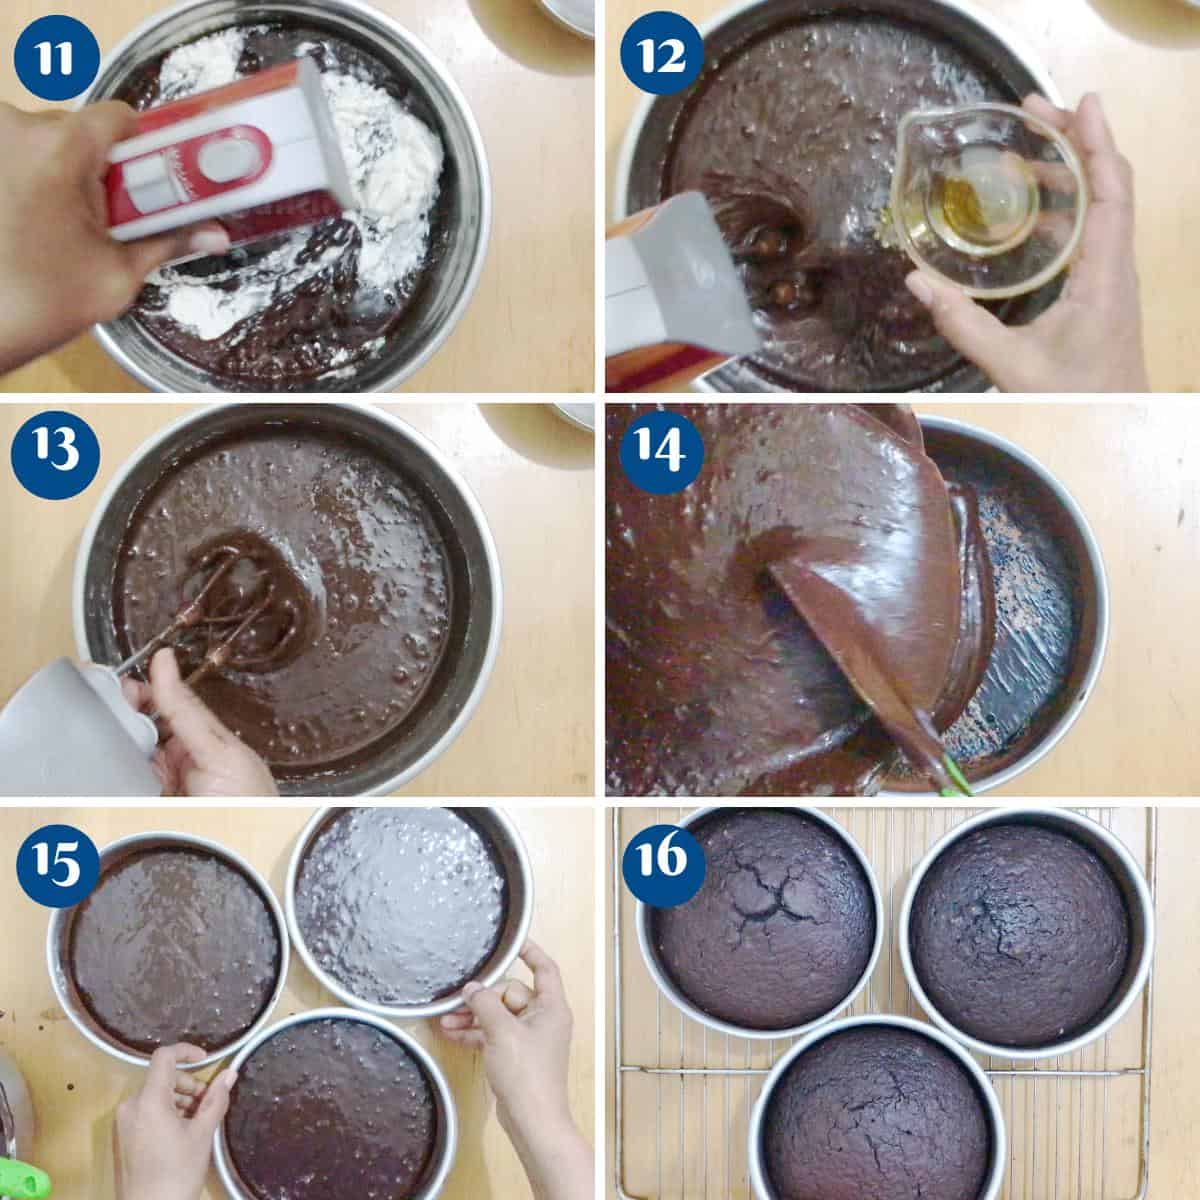 Progress pictures baking chocolate cake.